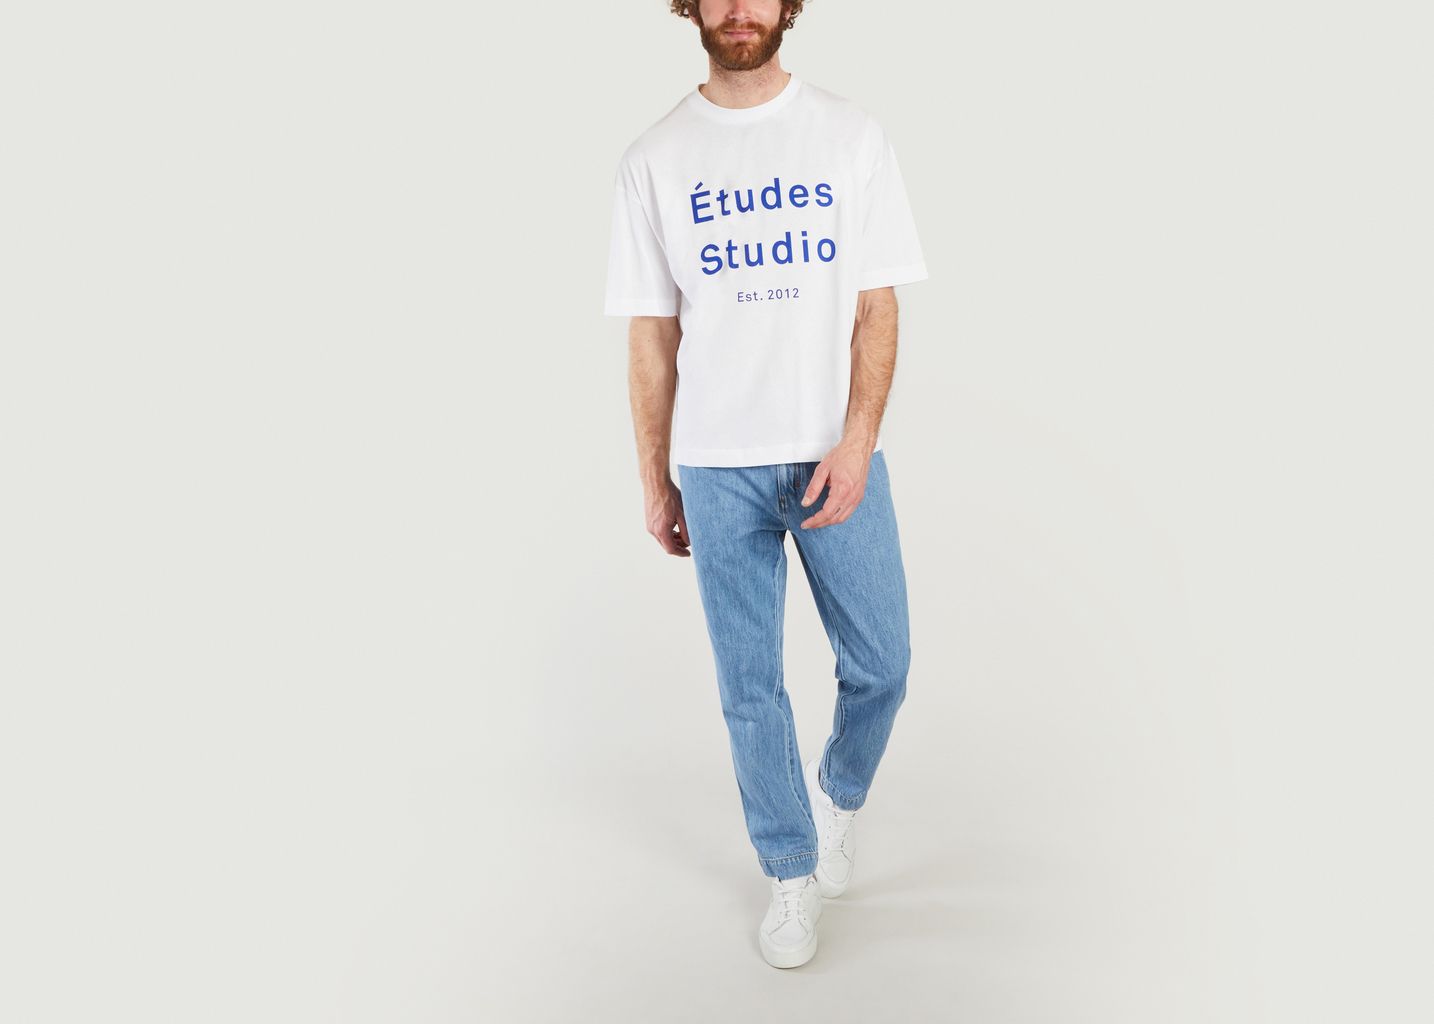 T-shirt Spirit - Études Studio